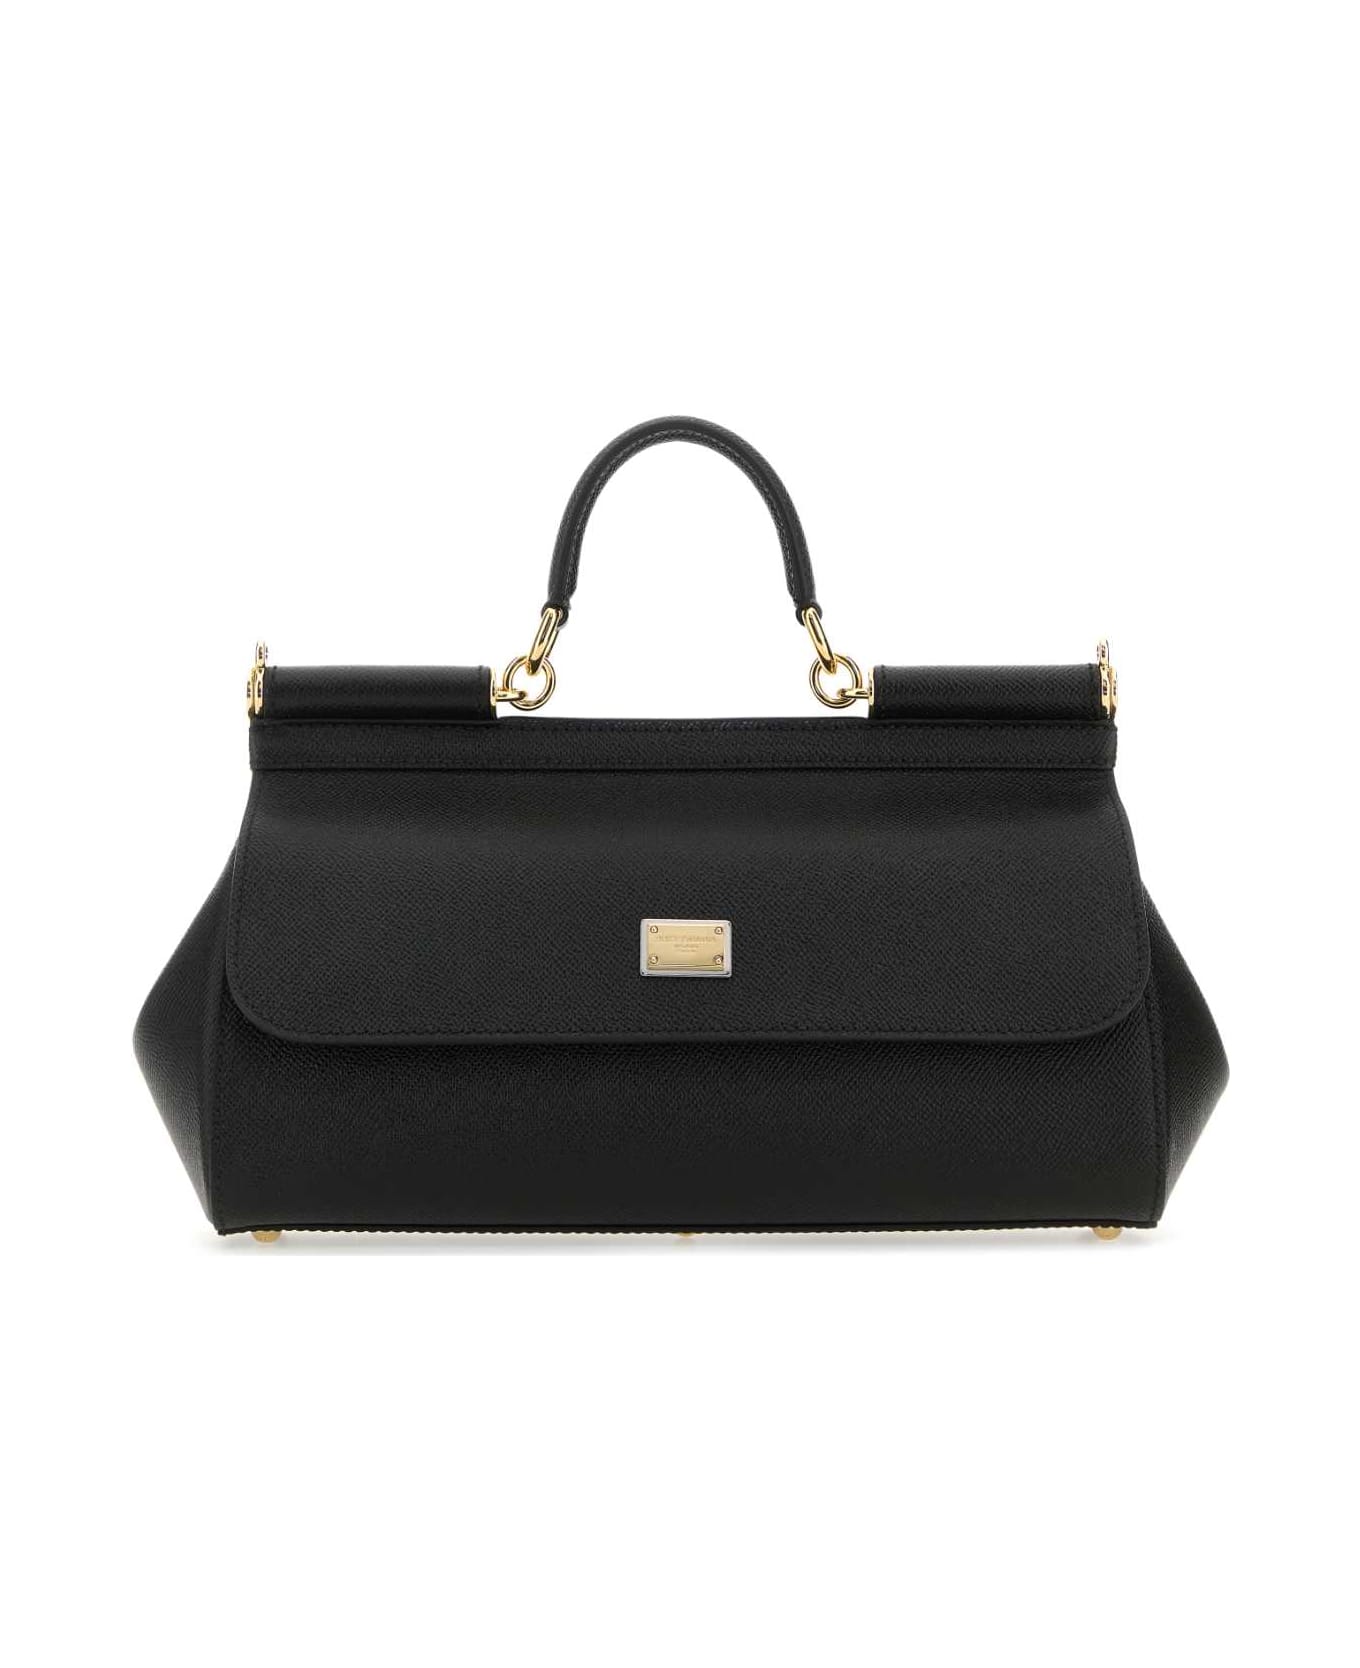 Dolce & Gabbana Black Leather Medium Sicily Handbag - 80999